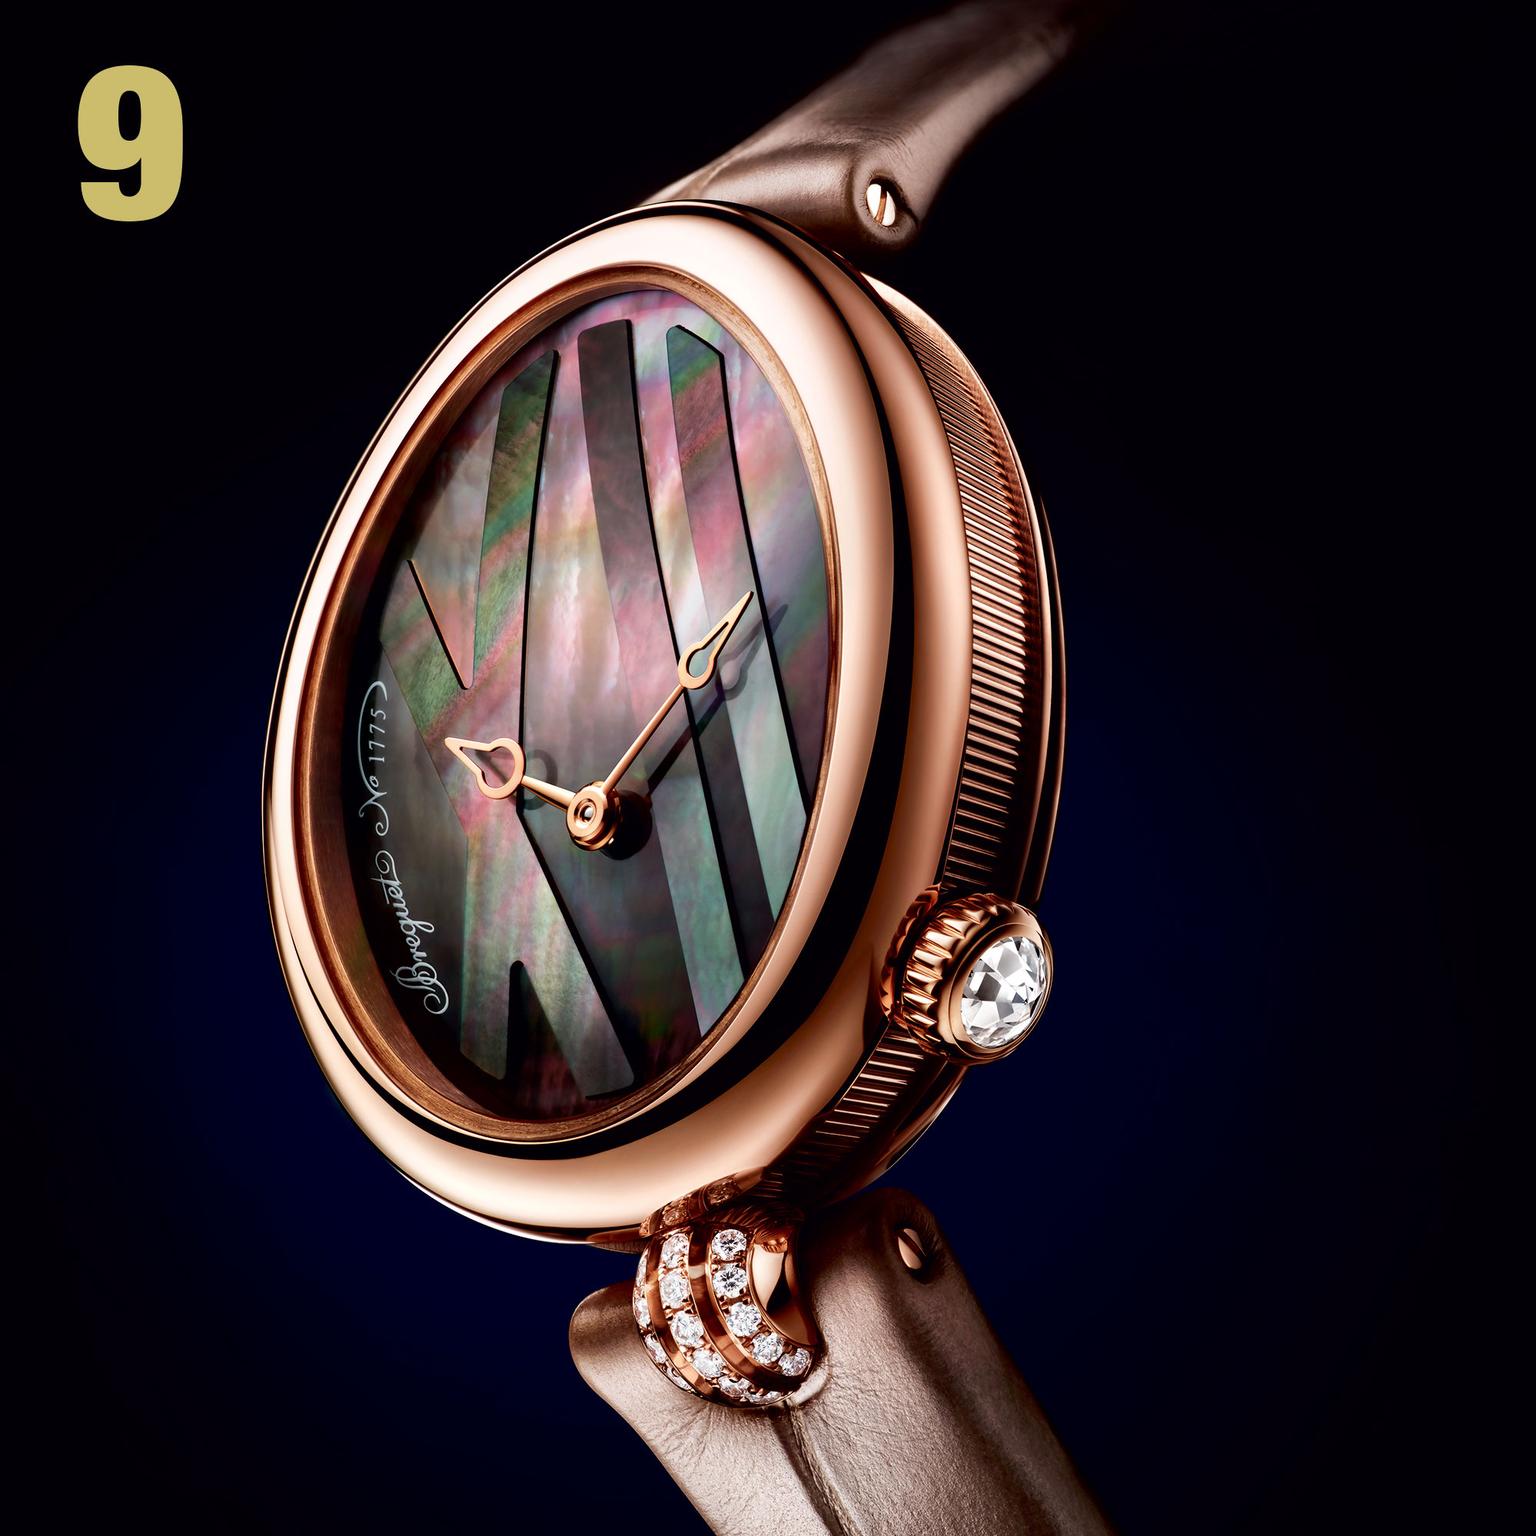 9 Breguet Reine de Naples Princesse Mini 9808 rose gold watch